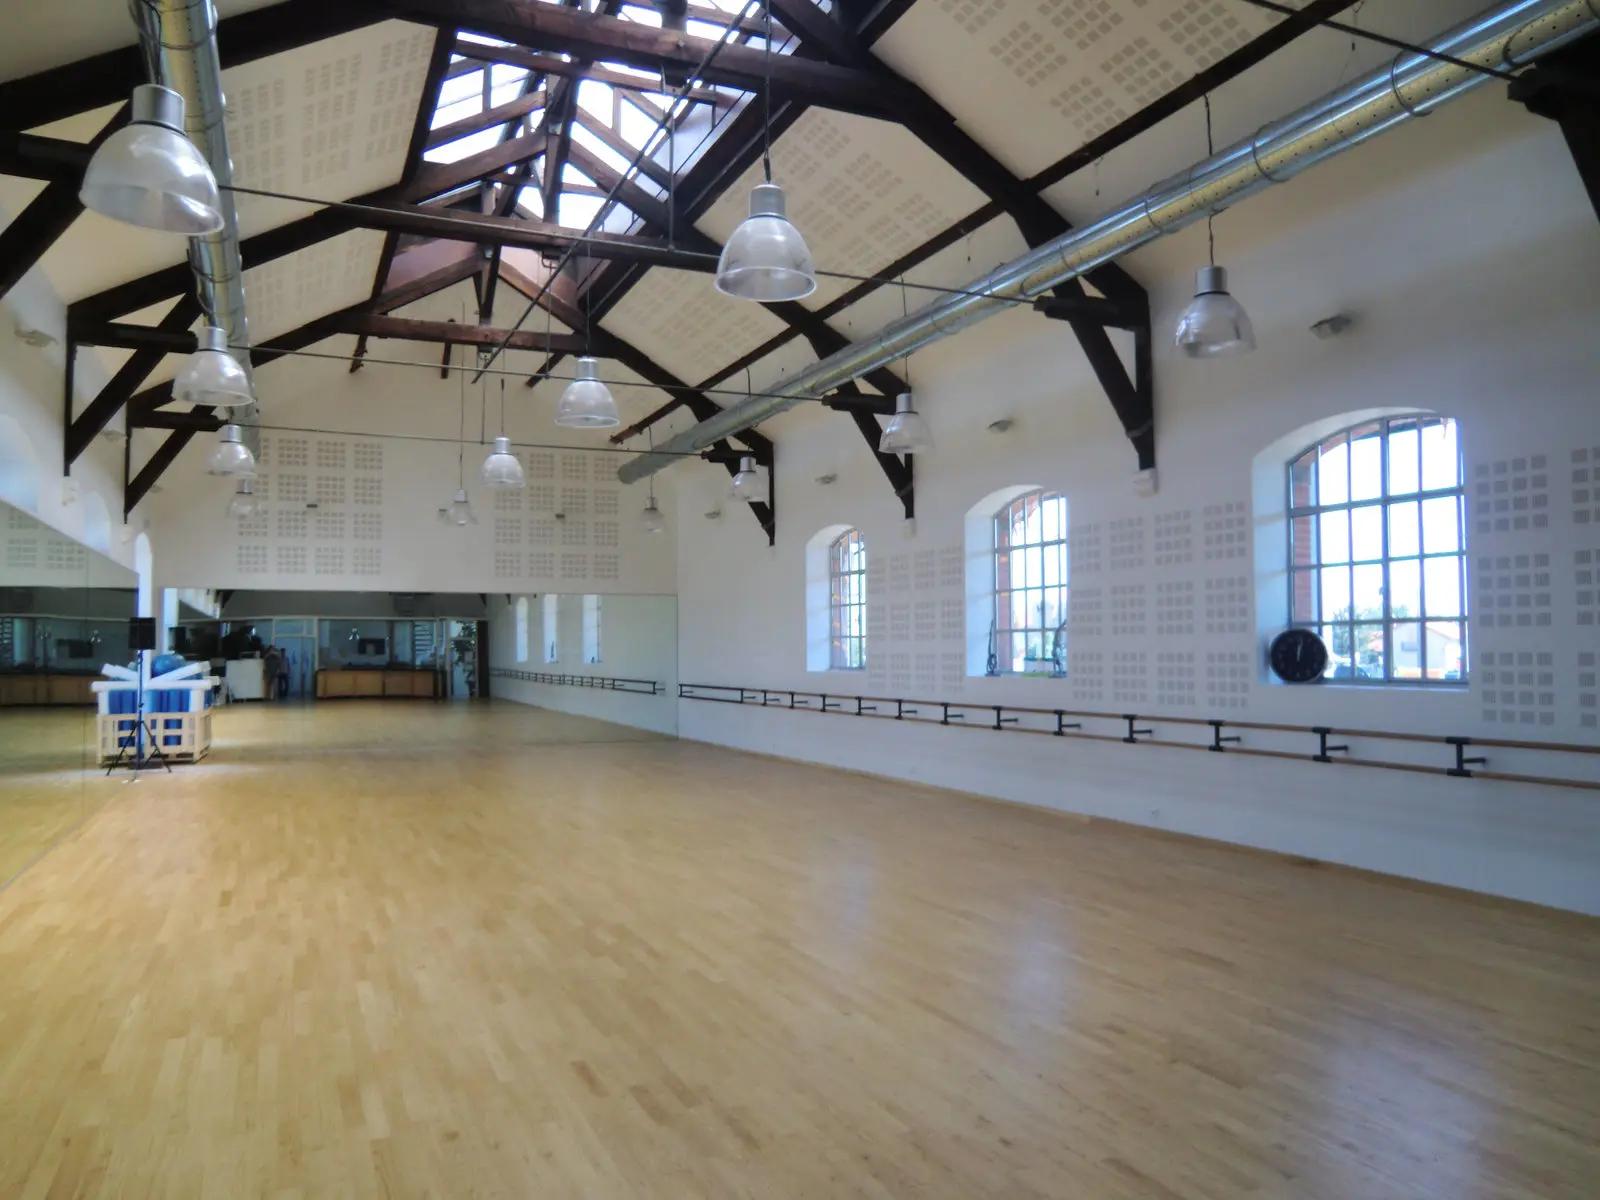 Bright & unusual dance studio ideal for filming